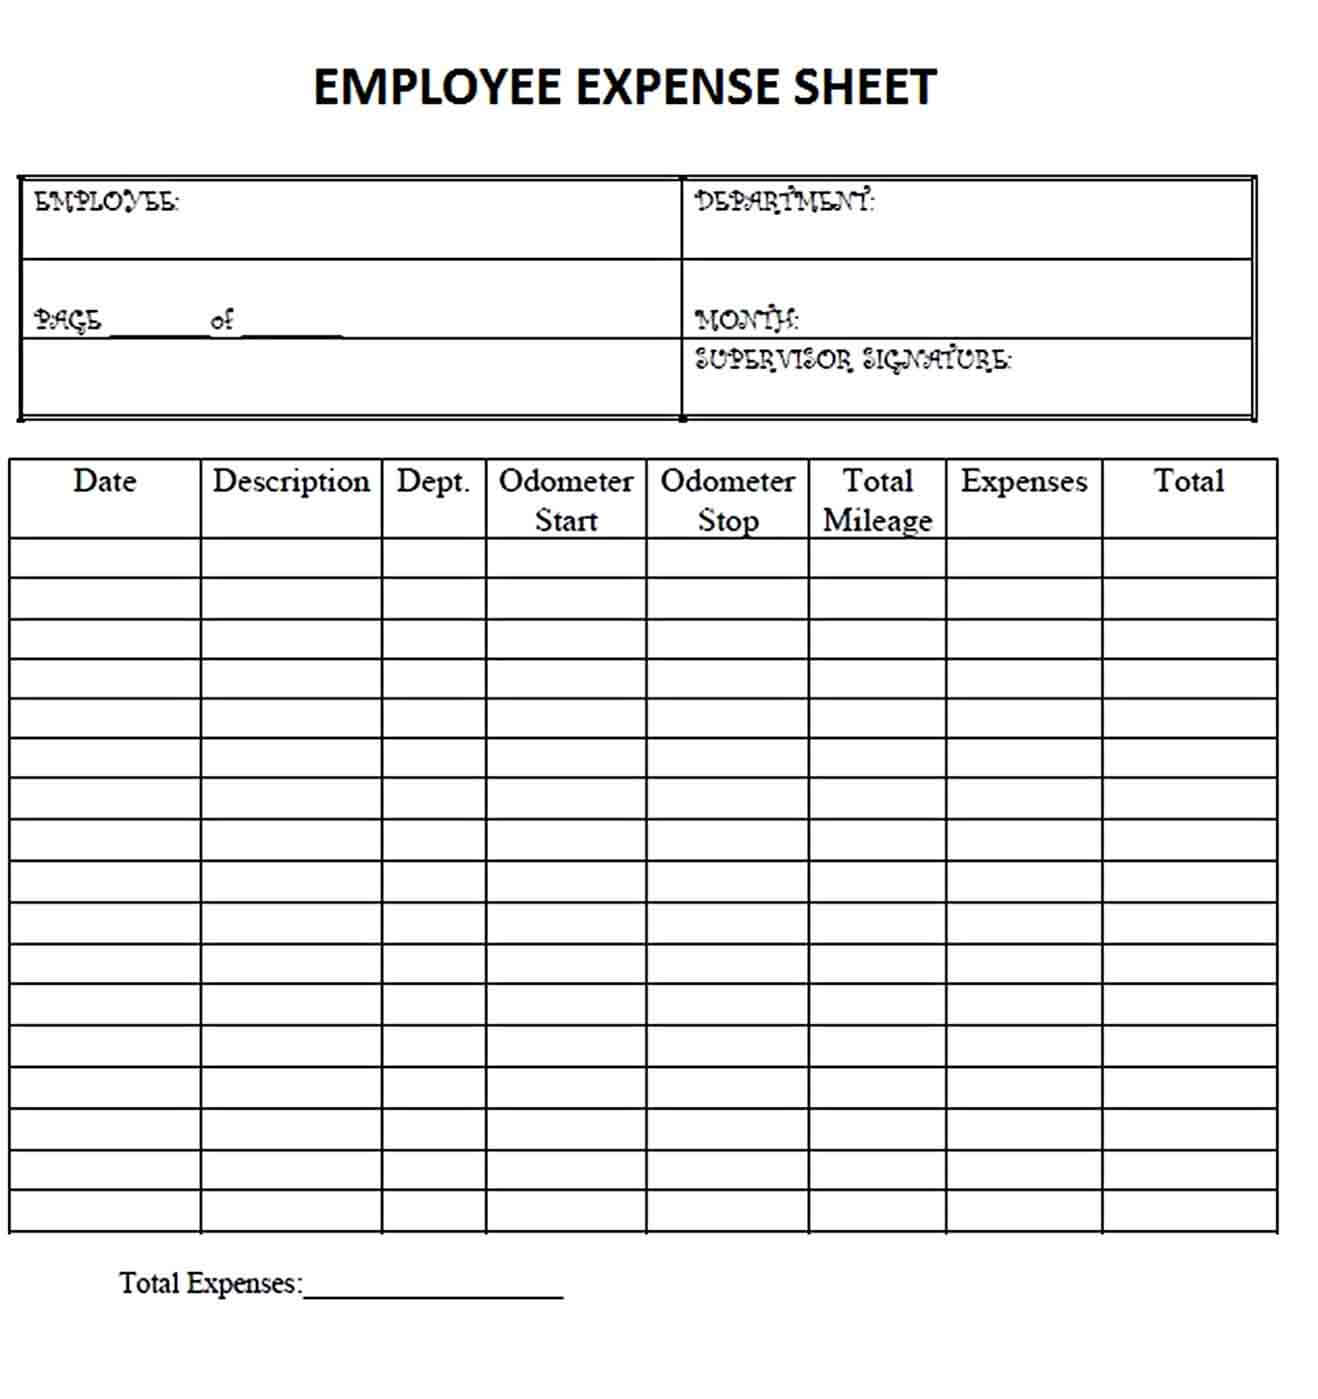 Employee Expense Sheet Template